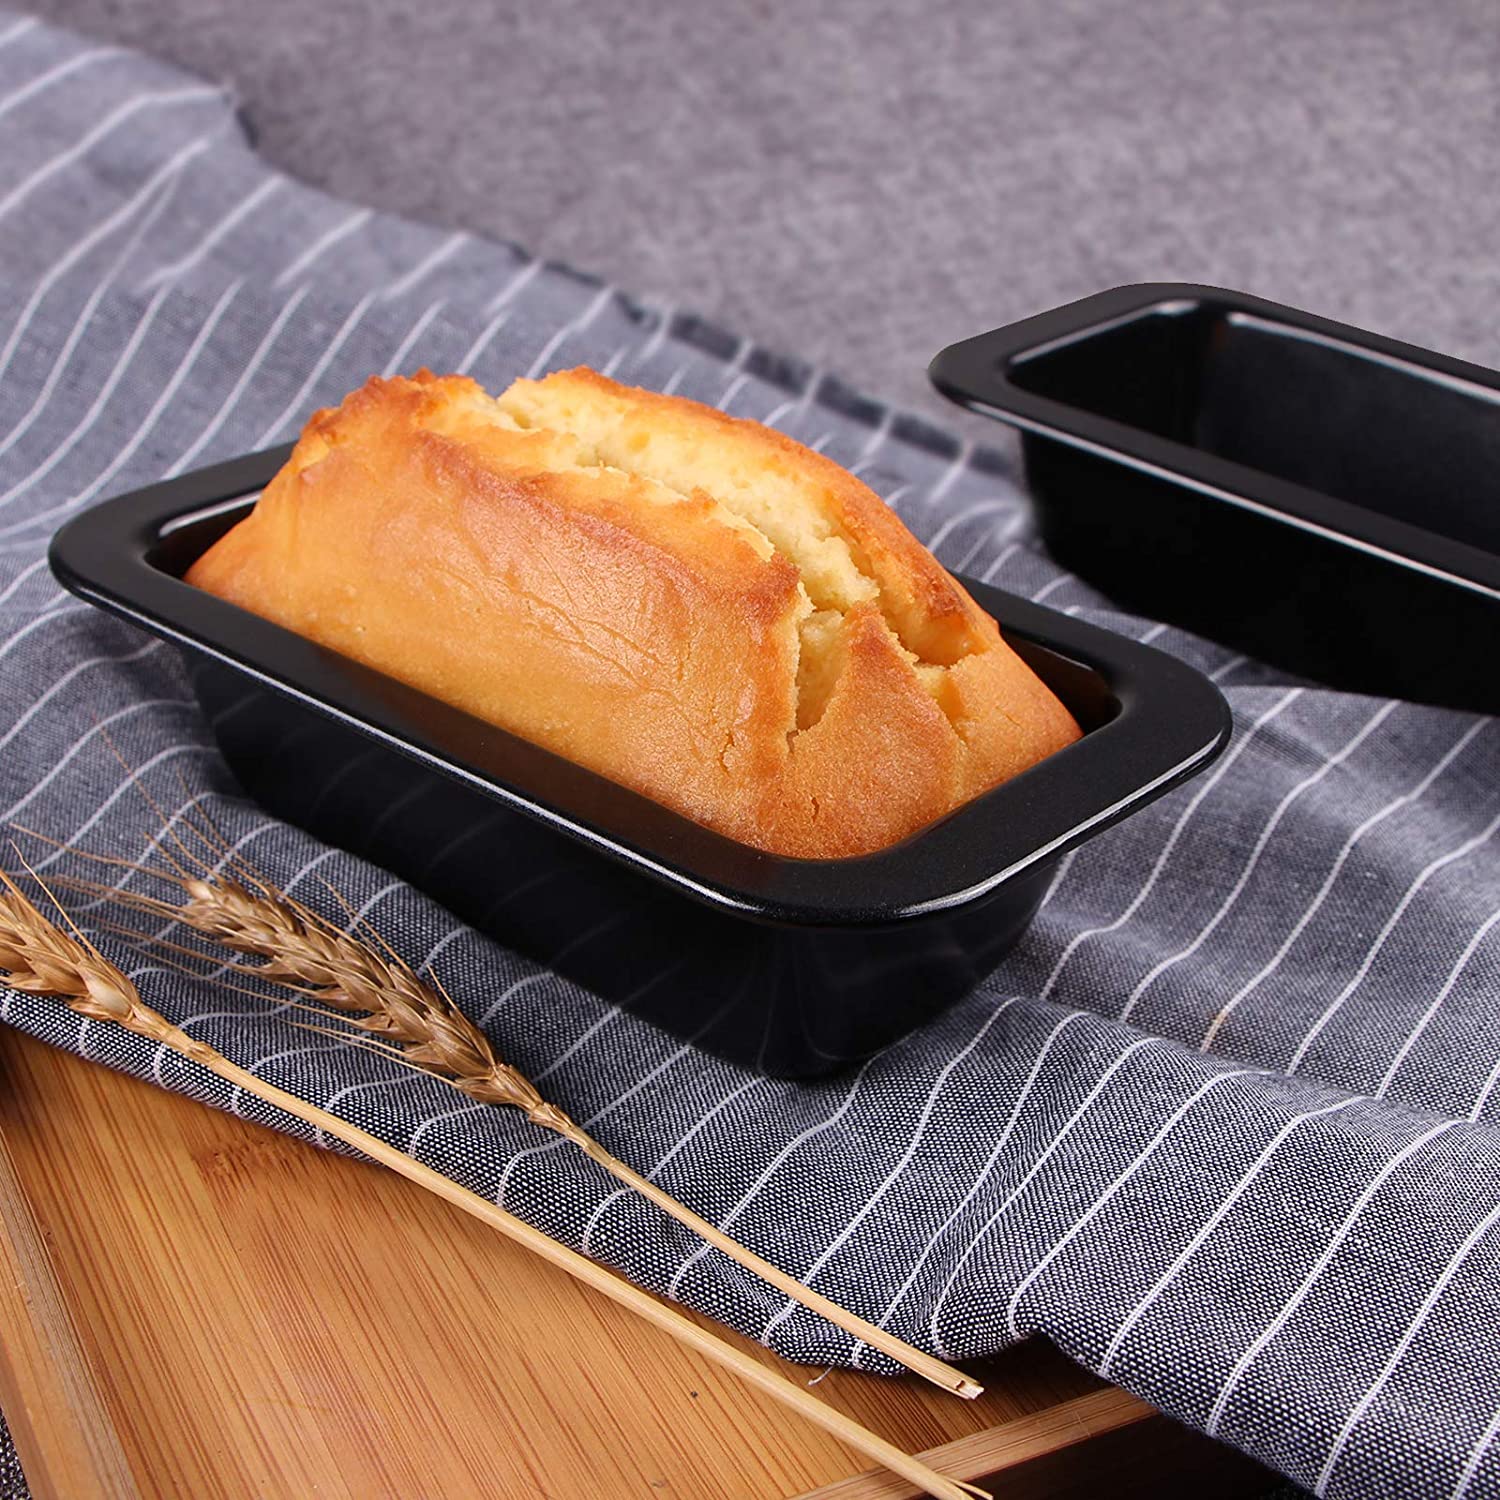 HONGBAKE Mini Loaf Pan for Baking Bread, 6 x 3.3 x 2 In Nonstick